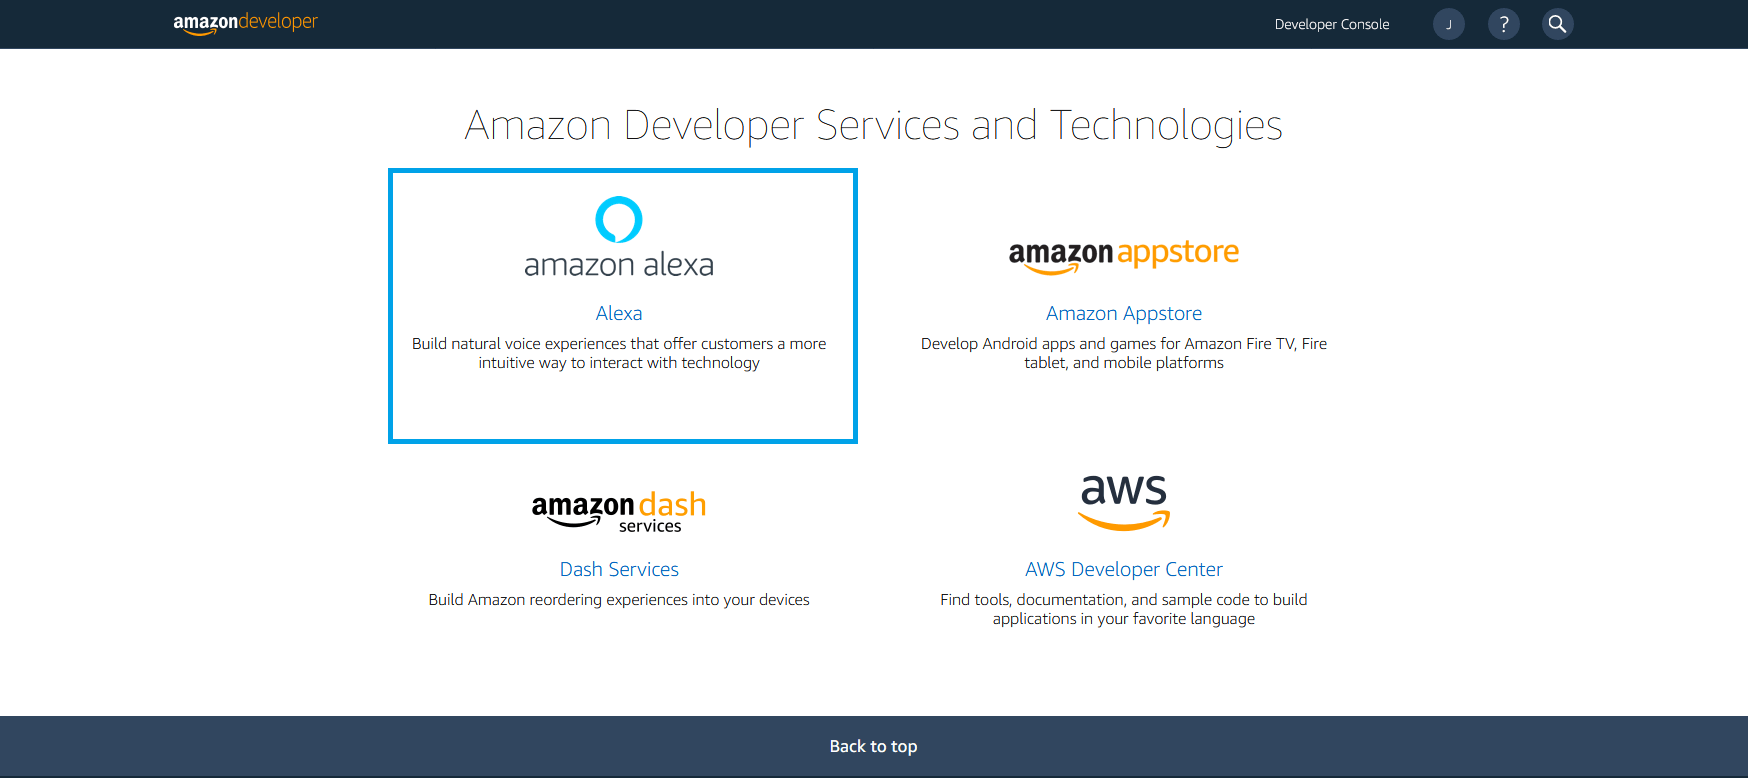 Amazon Developer Console: service overview